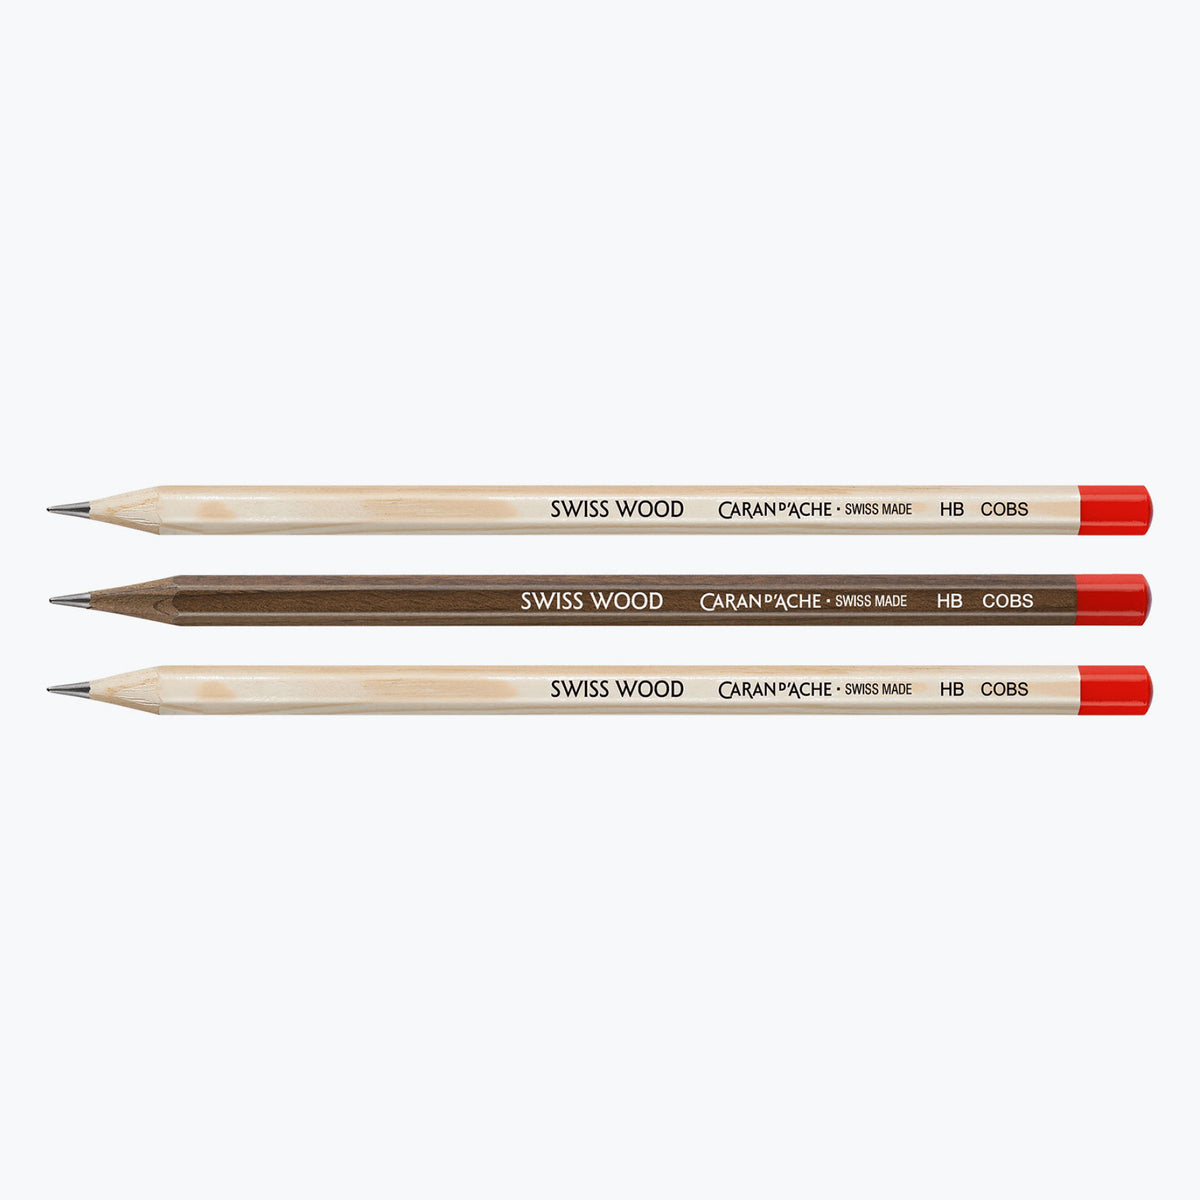 Caran d'Ache - Pencil - Swiss Wood (HB) - Gift Set of 3 <Outgoing>